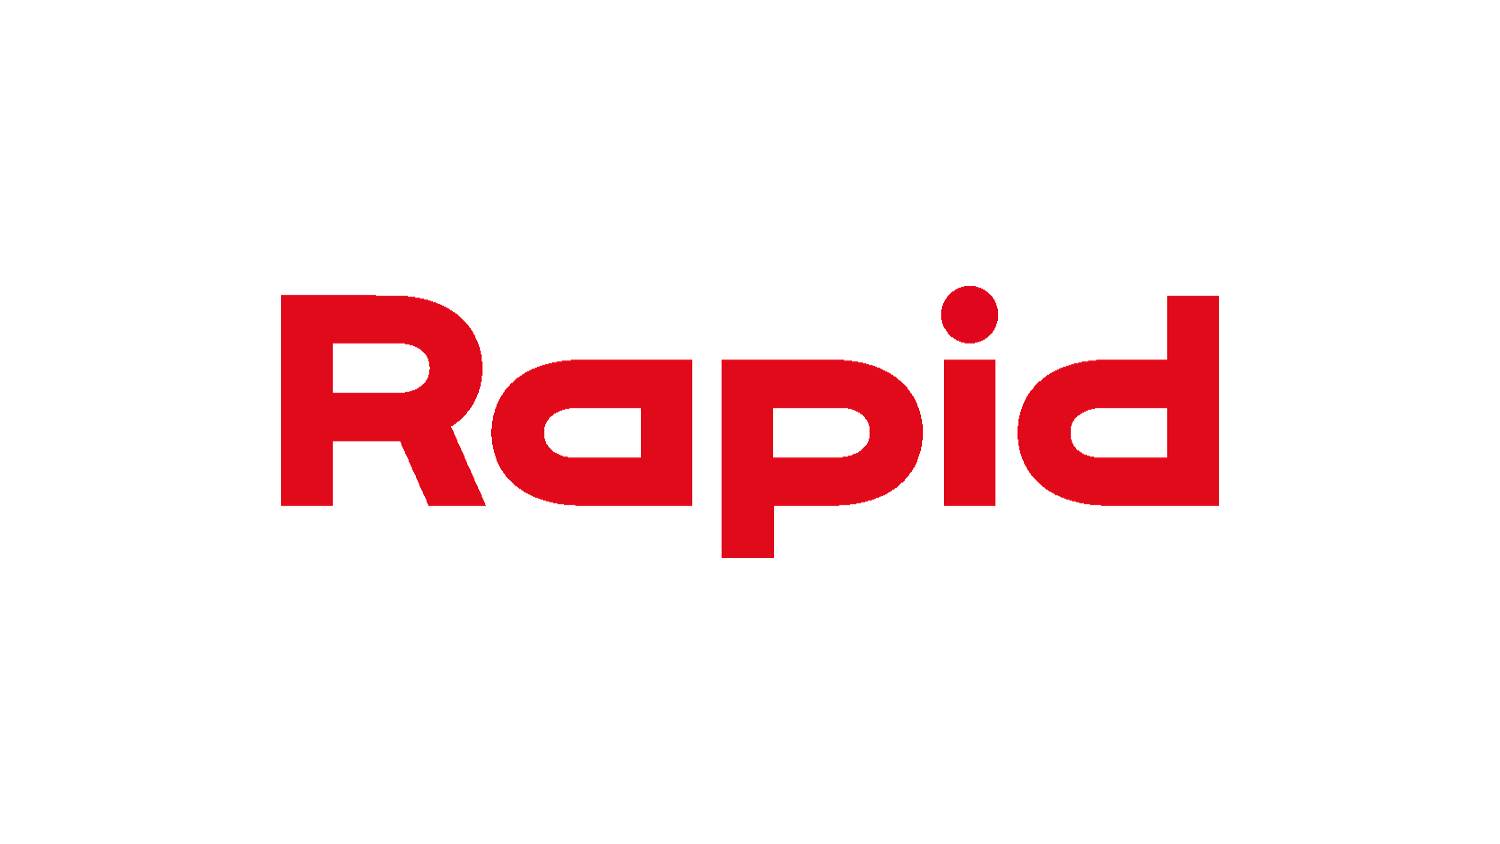 Rapid Logo Wallpaper